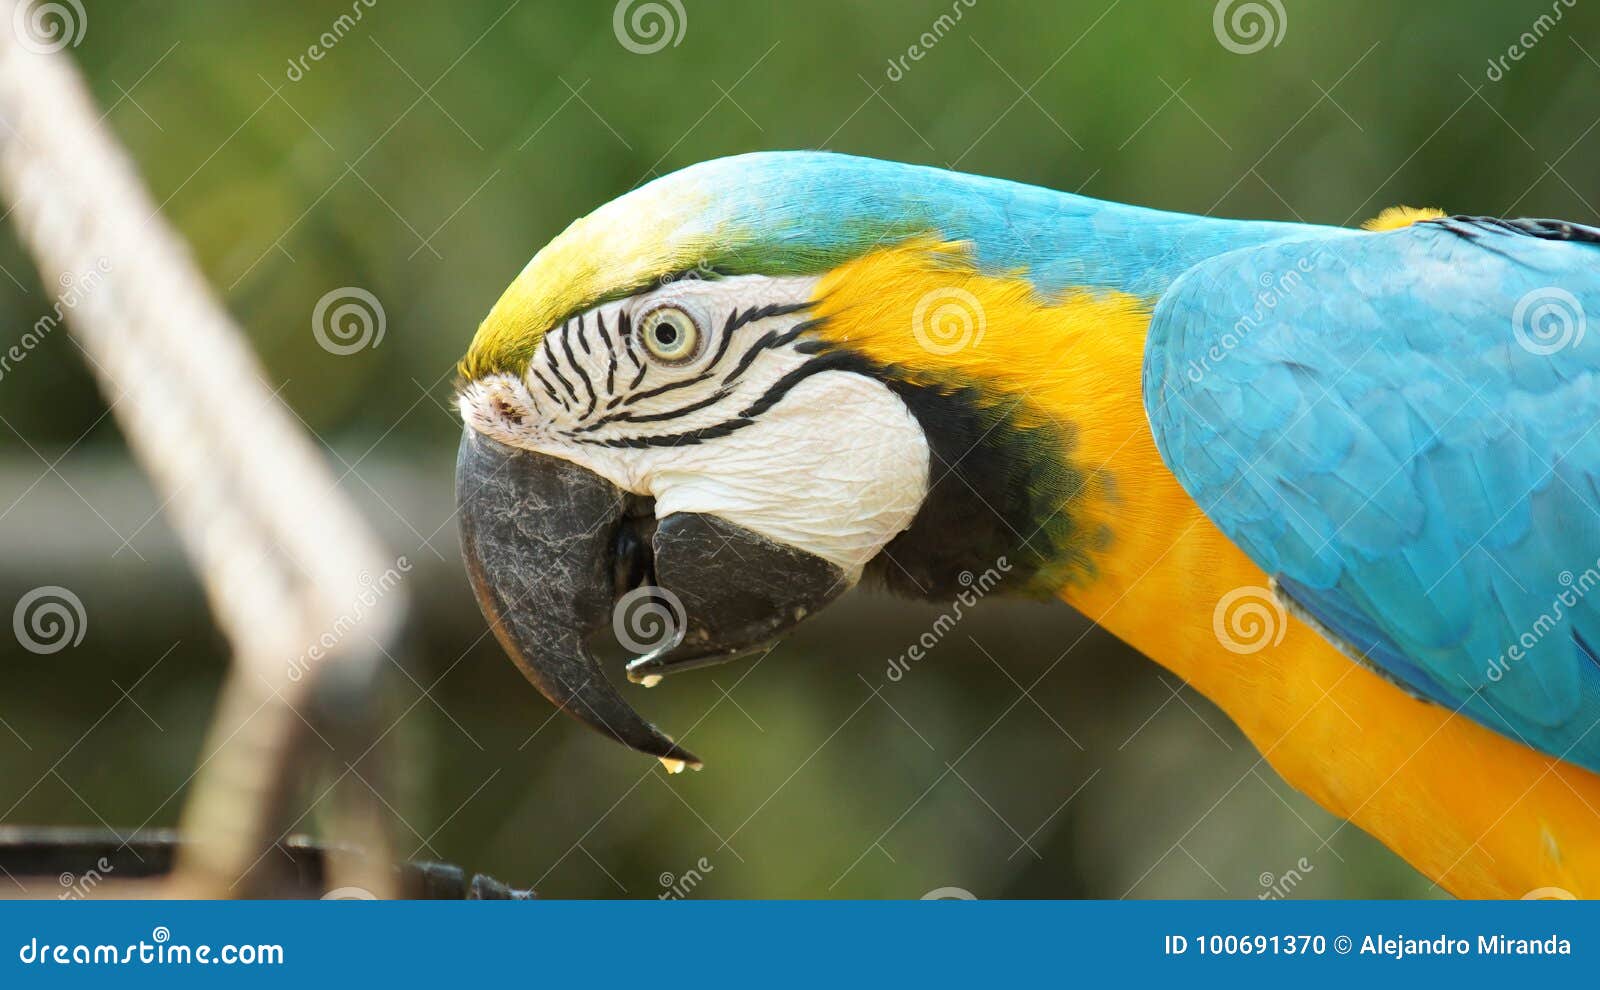 macaw on green background in ecuadorian amazon. common names: guacamayo or papagayo